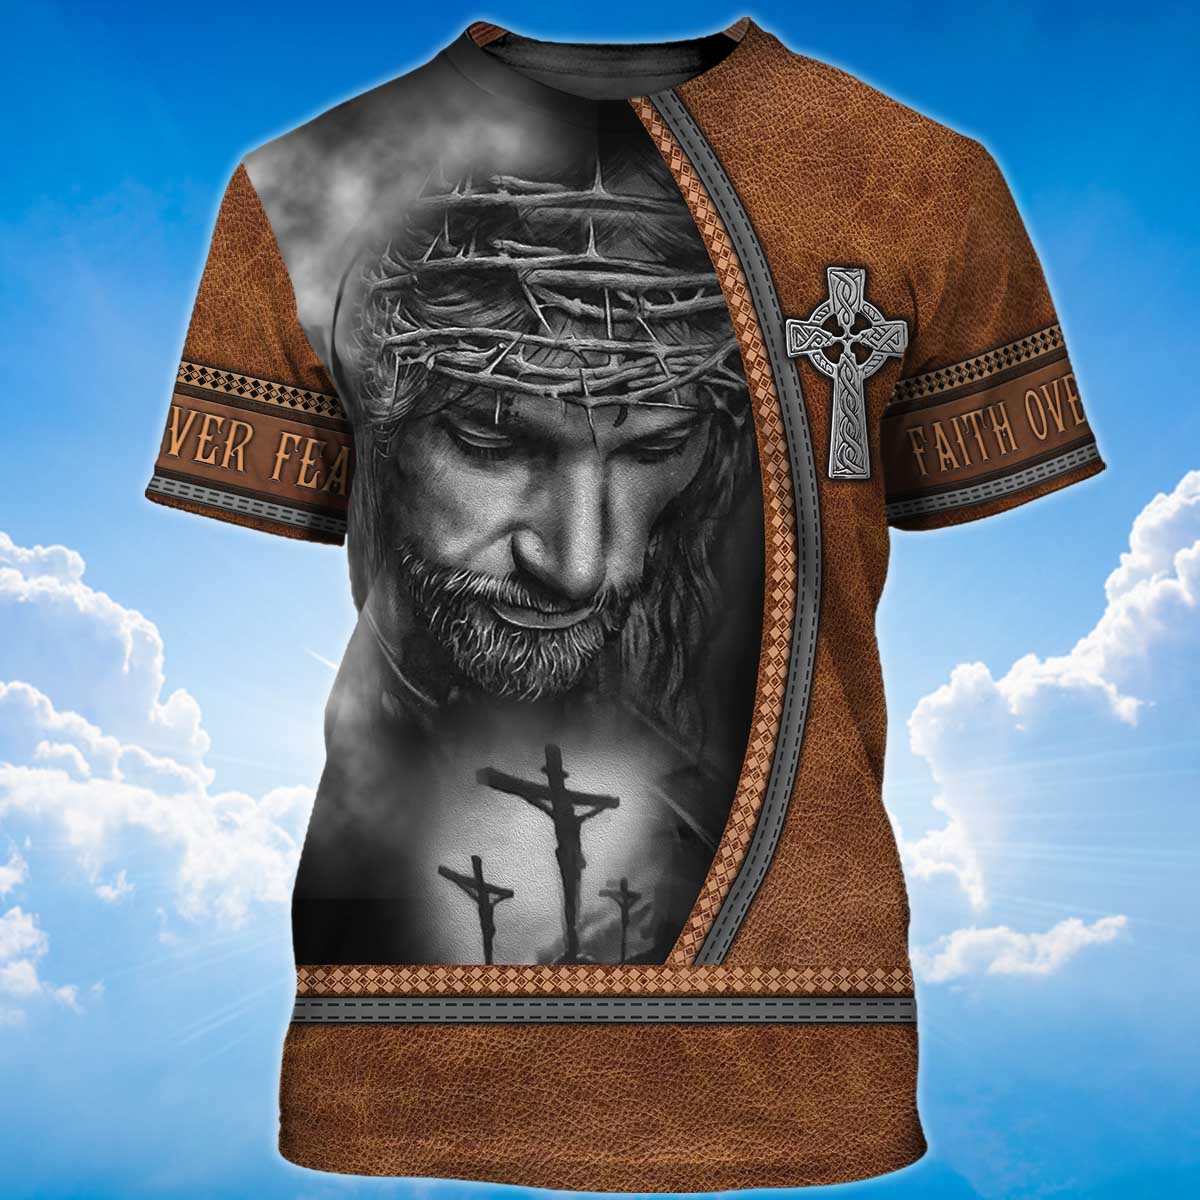 Feath Over Fear T Shirt God Jesus Shirt For Men